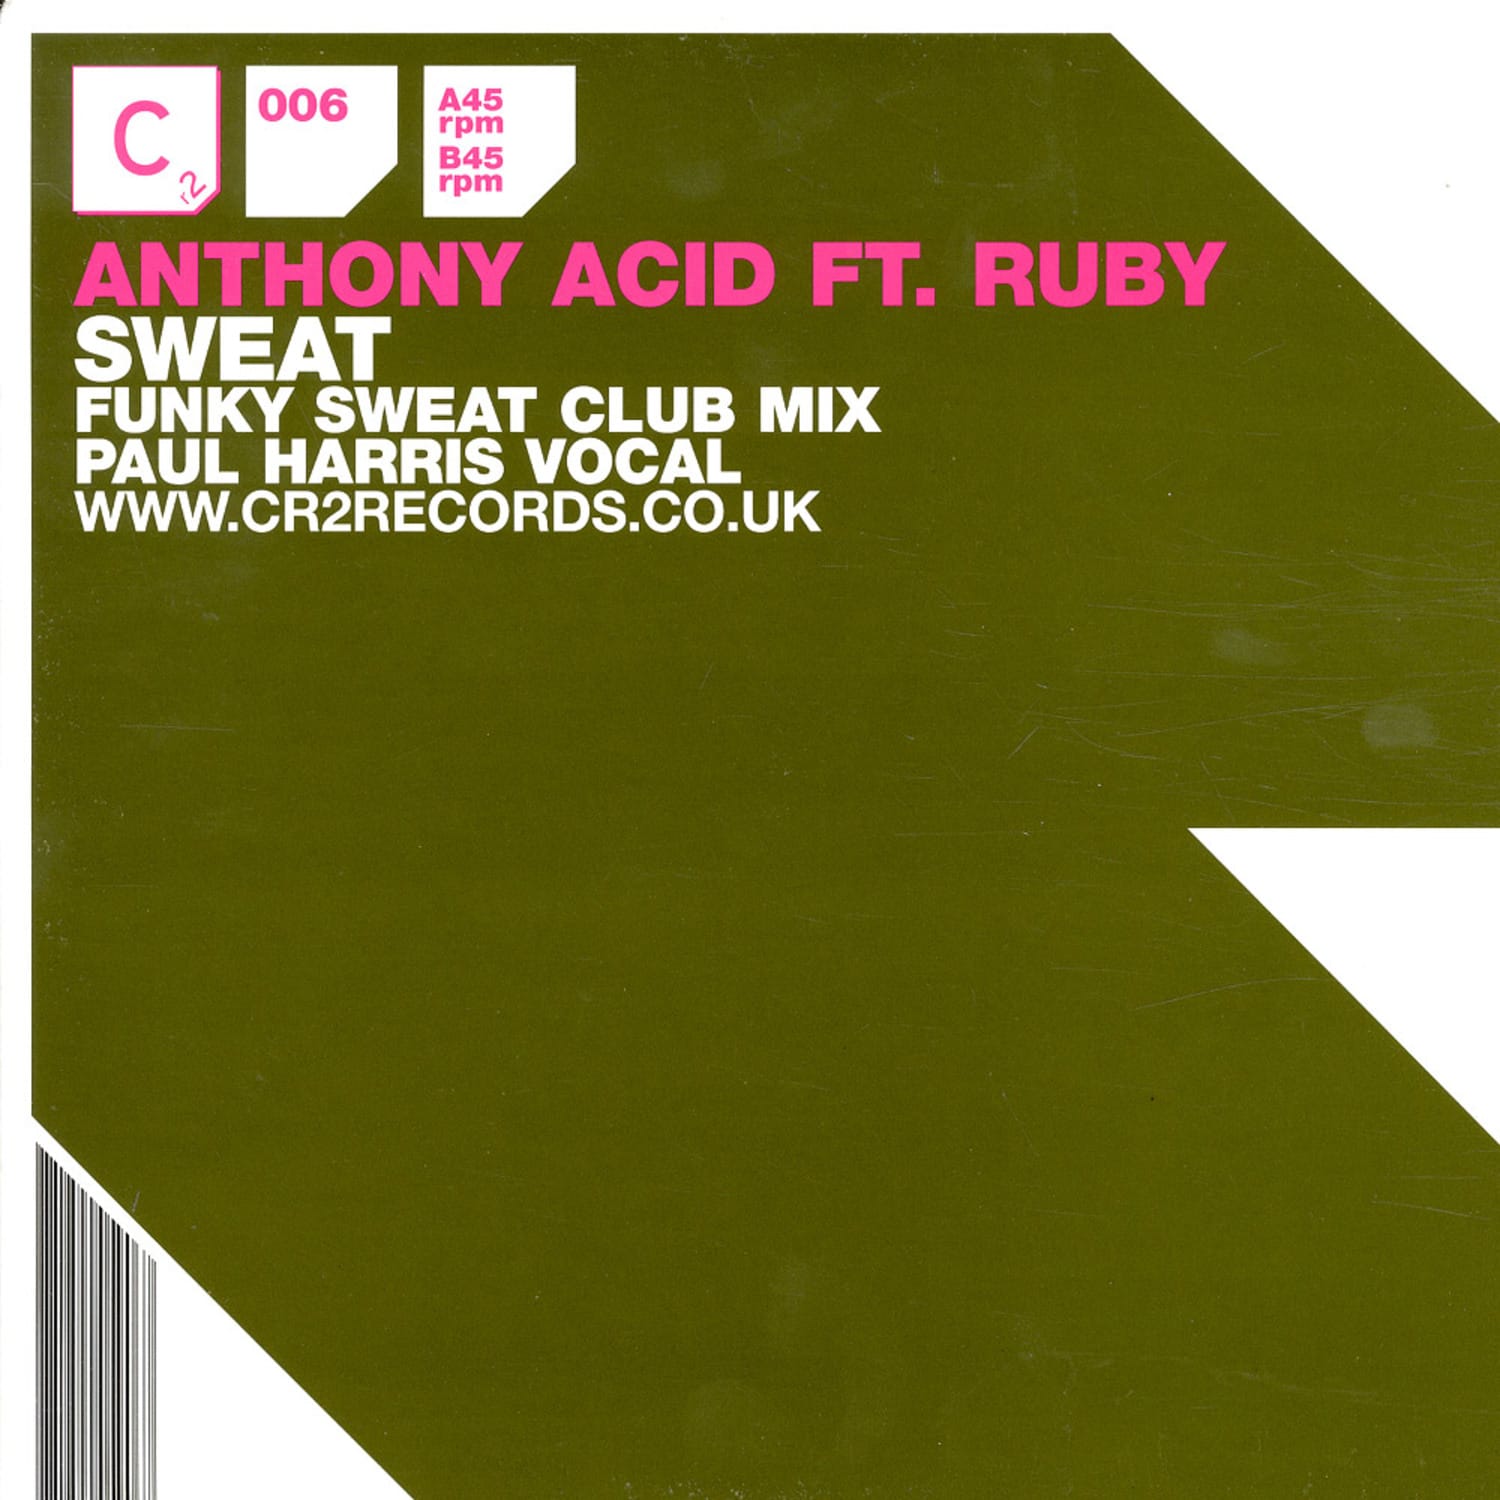 Anthony Acid feat Ruby - SWEAT